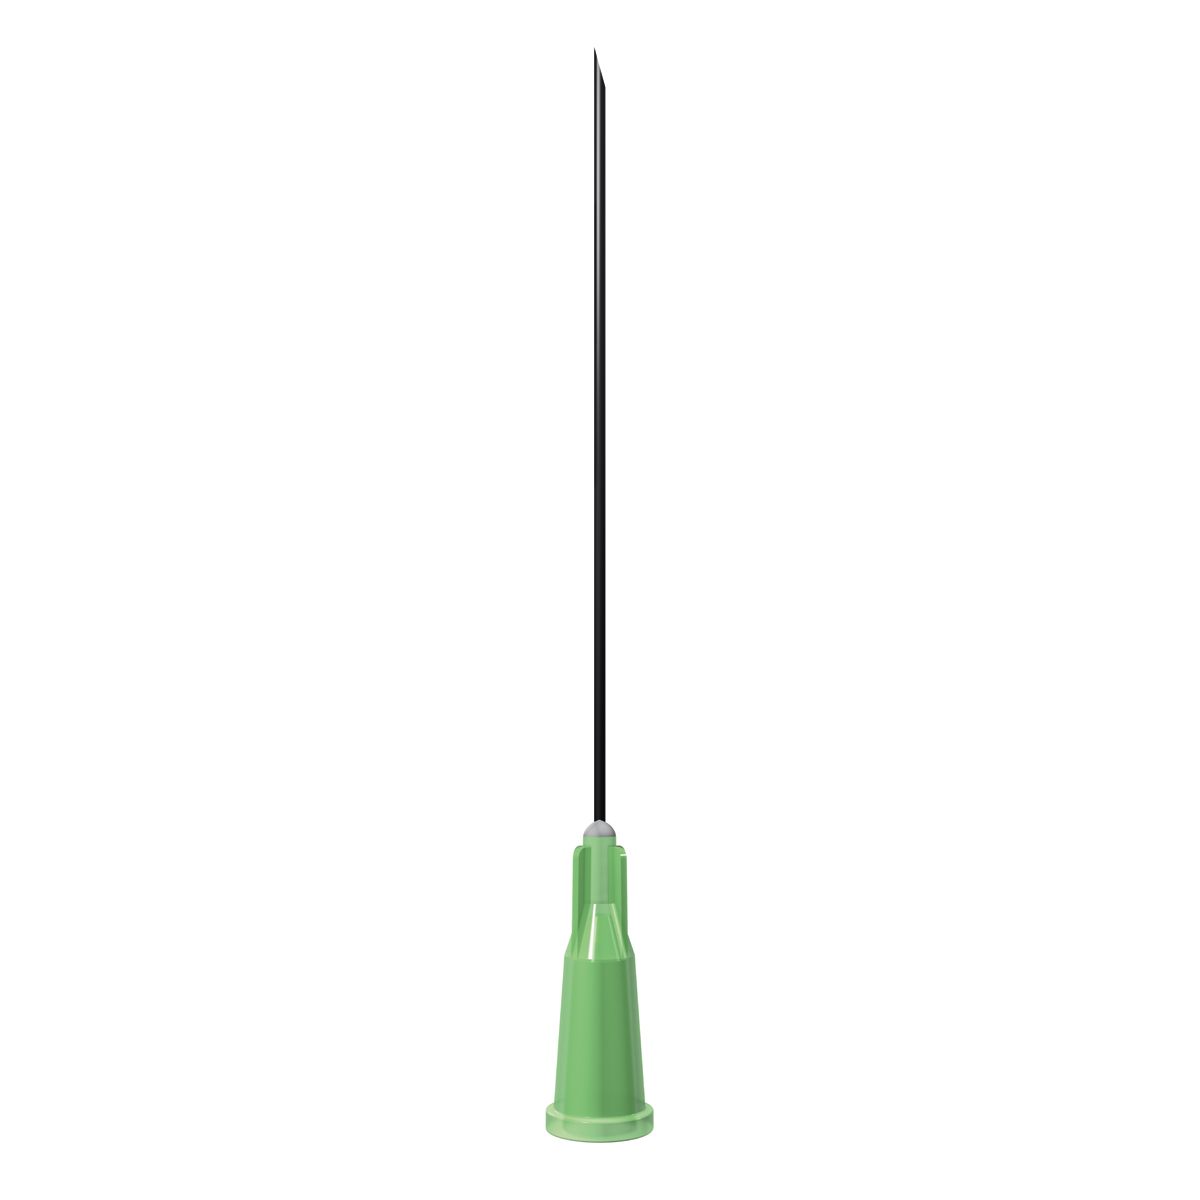 Long Green 21g 50mm 2 Inch Needle